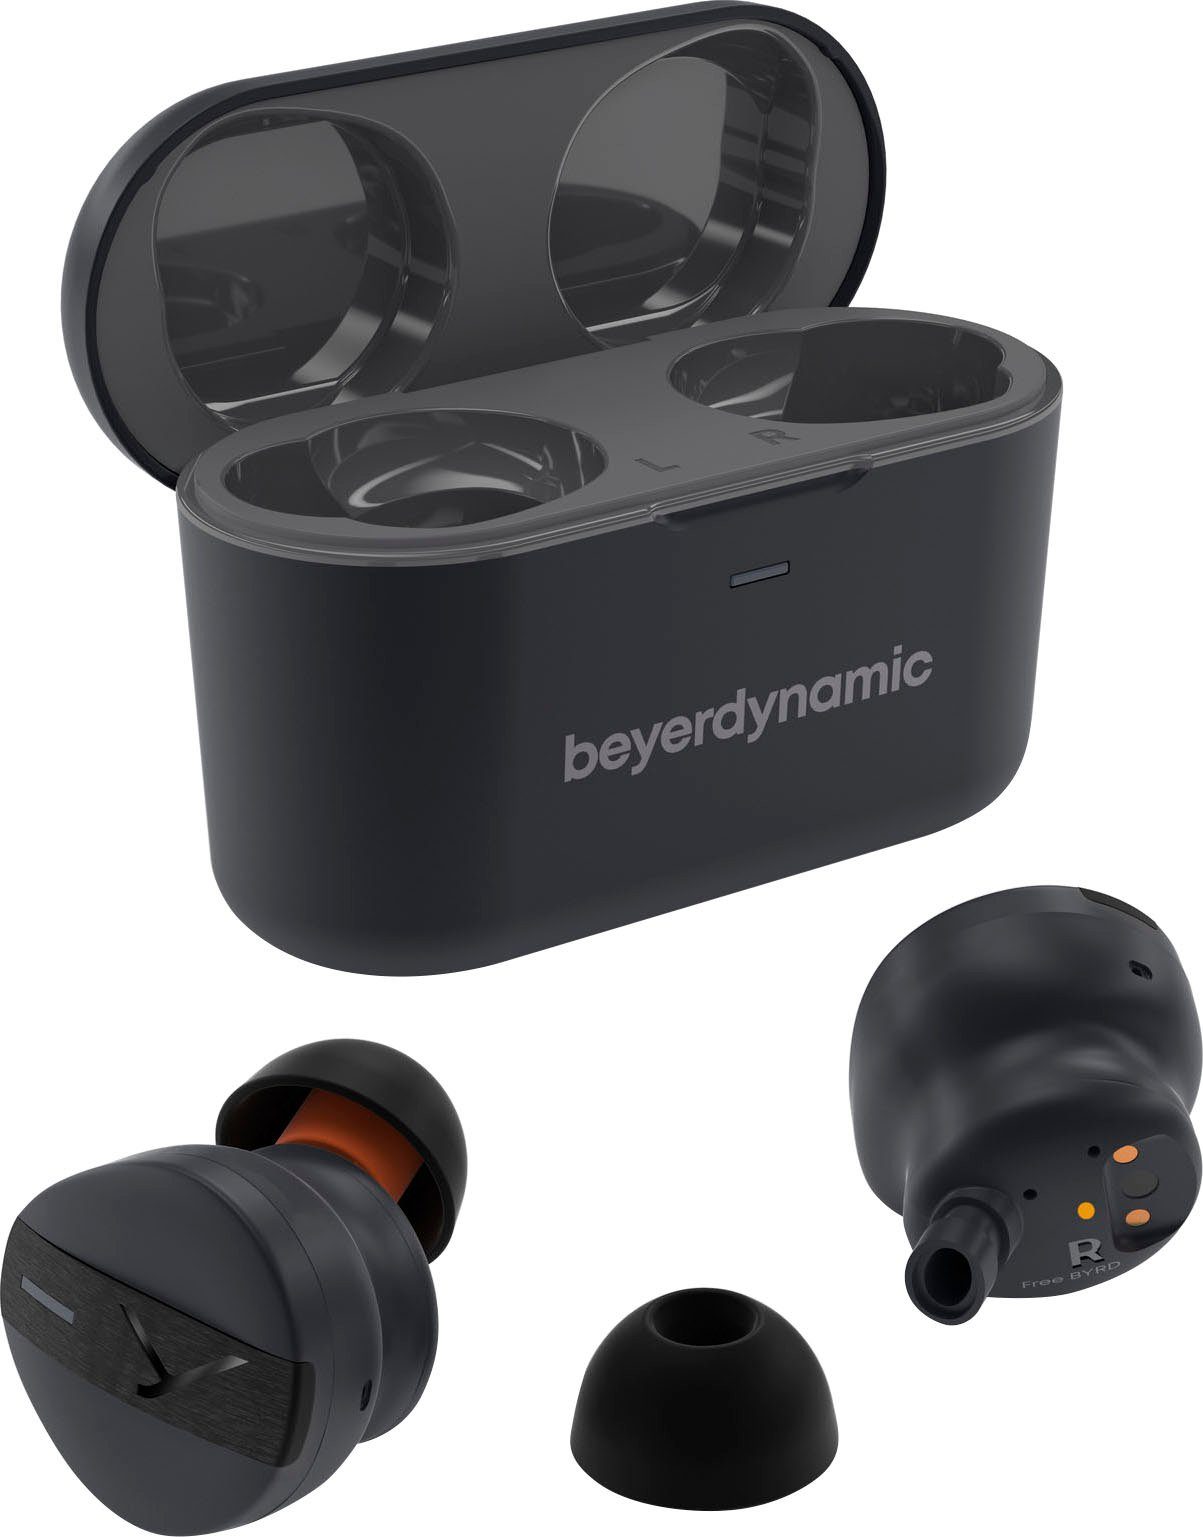 Free In-Ear-Kopfhörer BYRD wireless beyerdynamic (Sprachsteuerung)